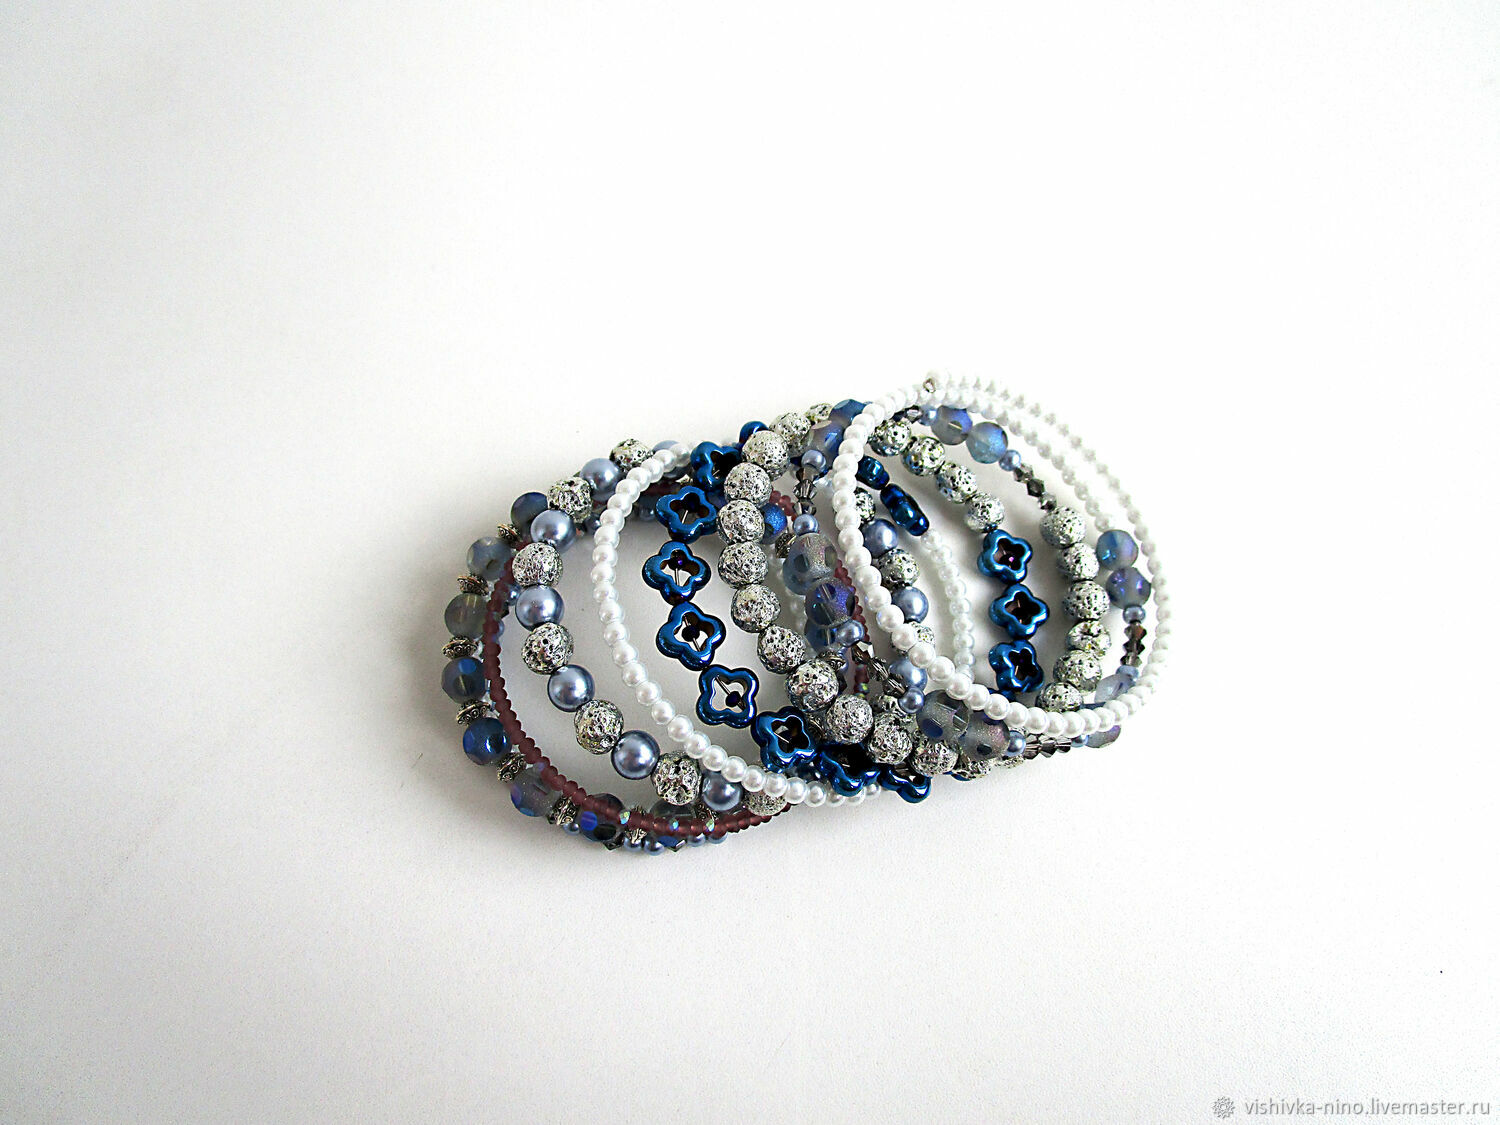 A bracelet on the hand made of beads and beads WALKING ON THE MOON costume jewelry, Bead bracelet, Nizhny Novgorod,  Фото №1